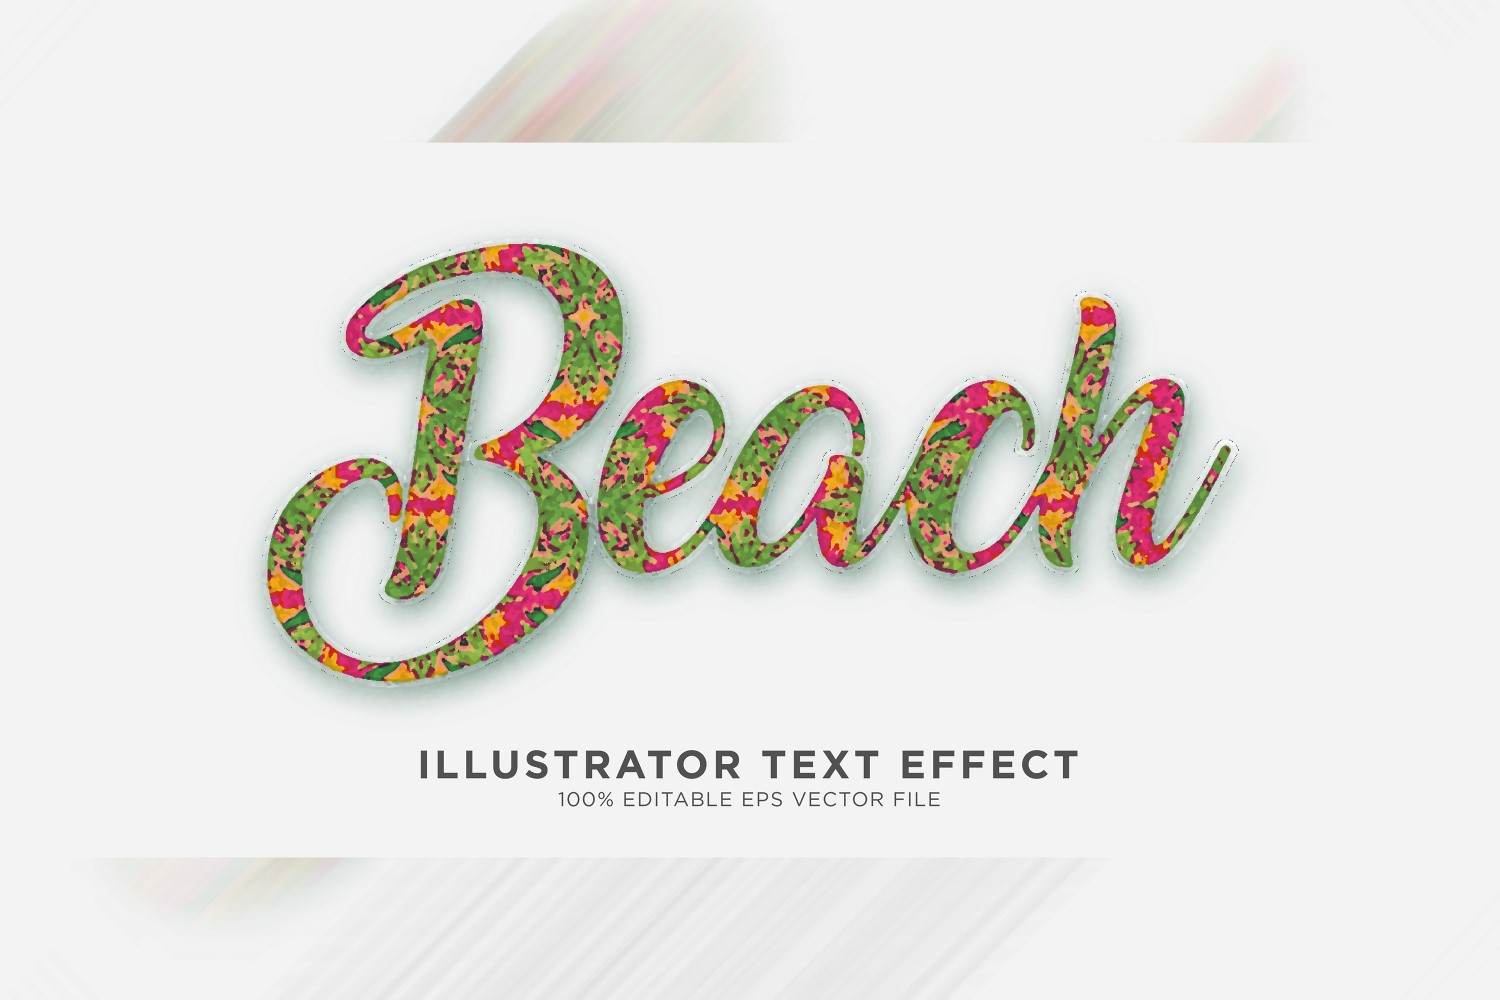 Beach illustrator Text Effect Illustration